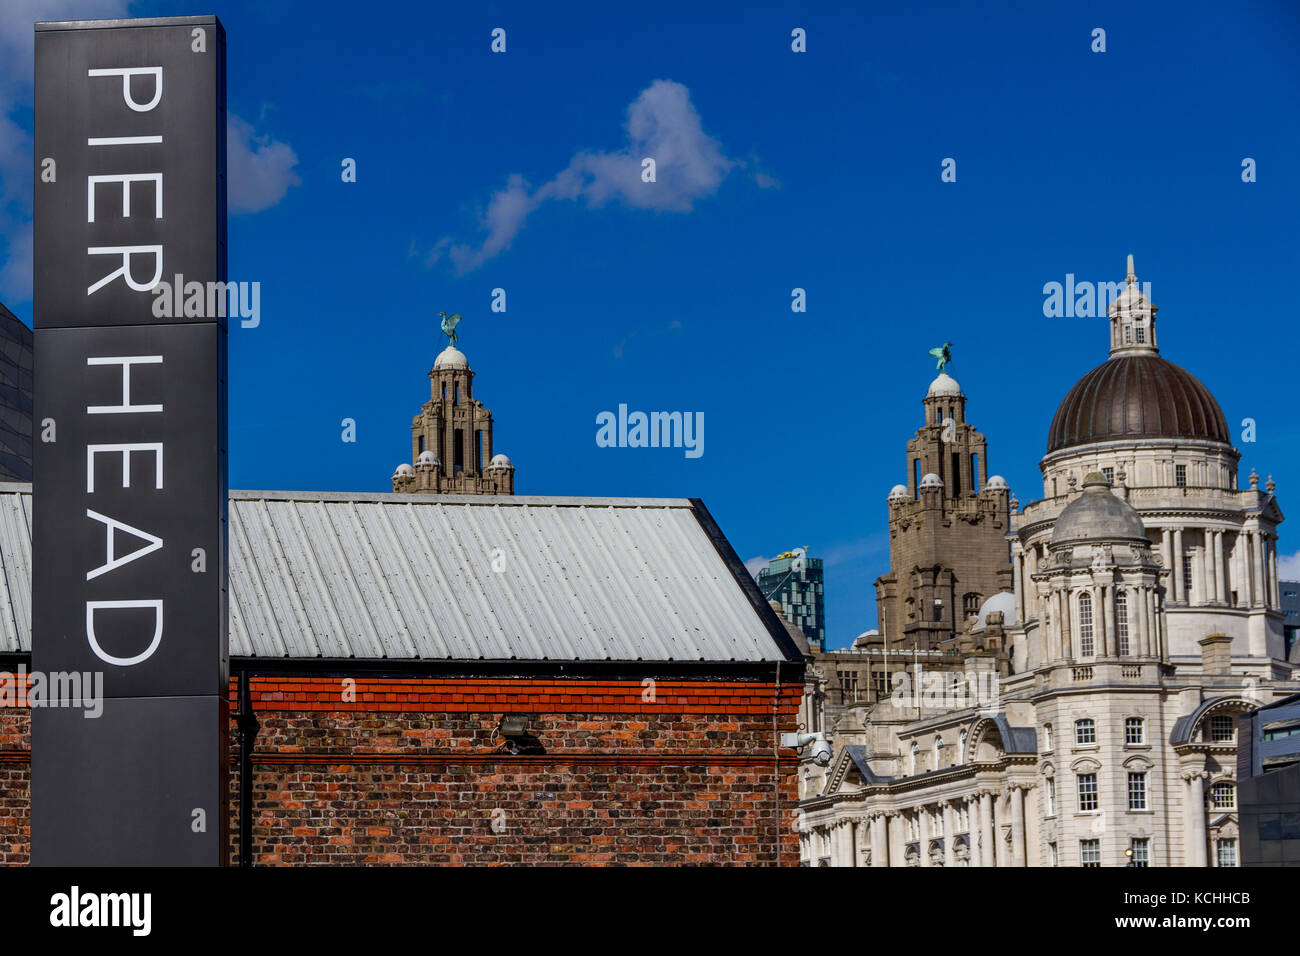 Das Royal Liver Building & Hafen von Liverpool Building, Pier Head, Liverpool, Merseyside, UK Stockfoto